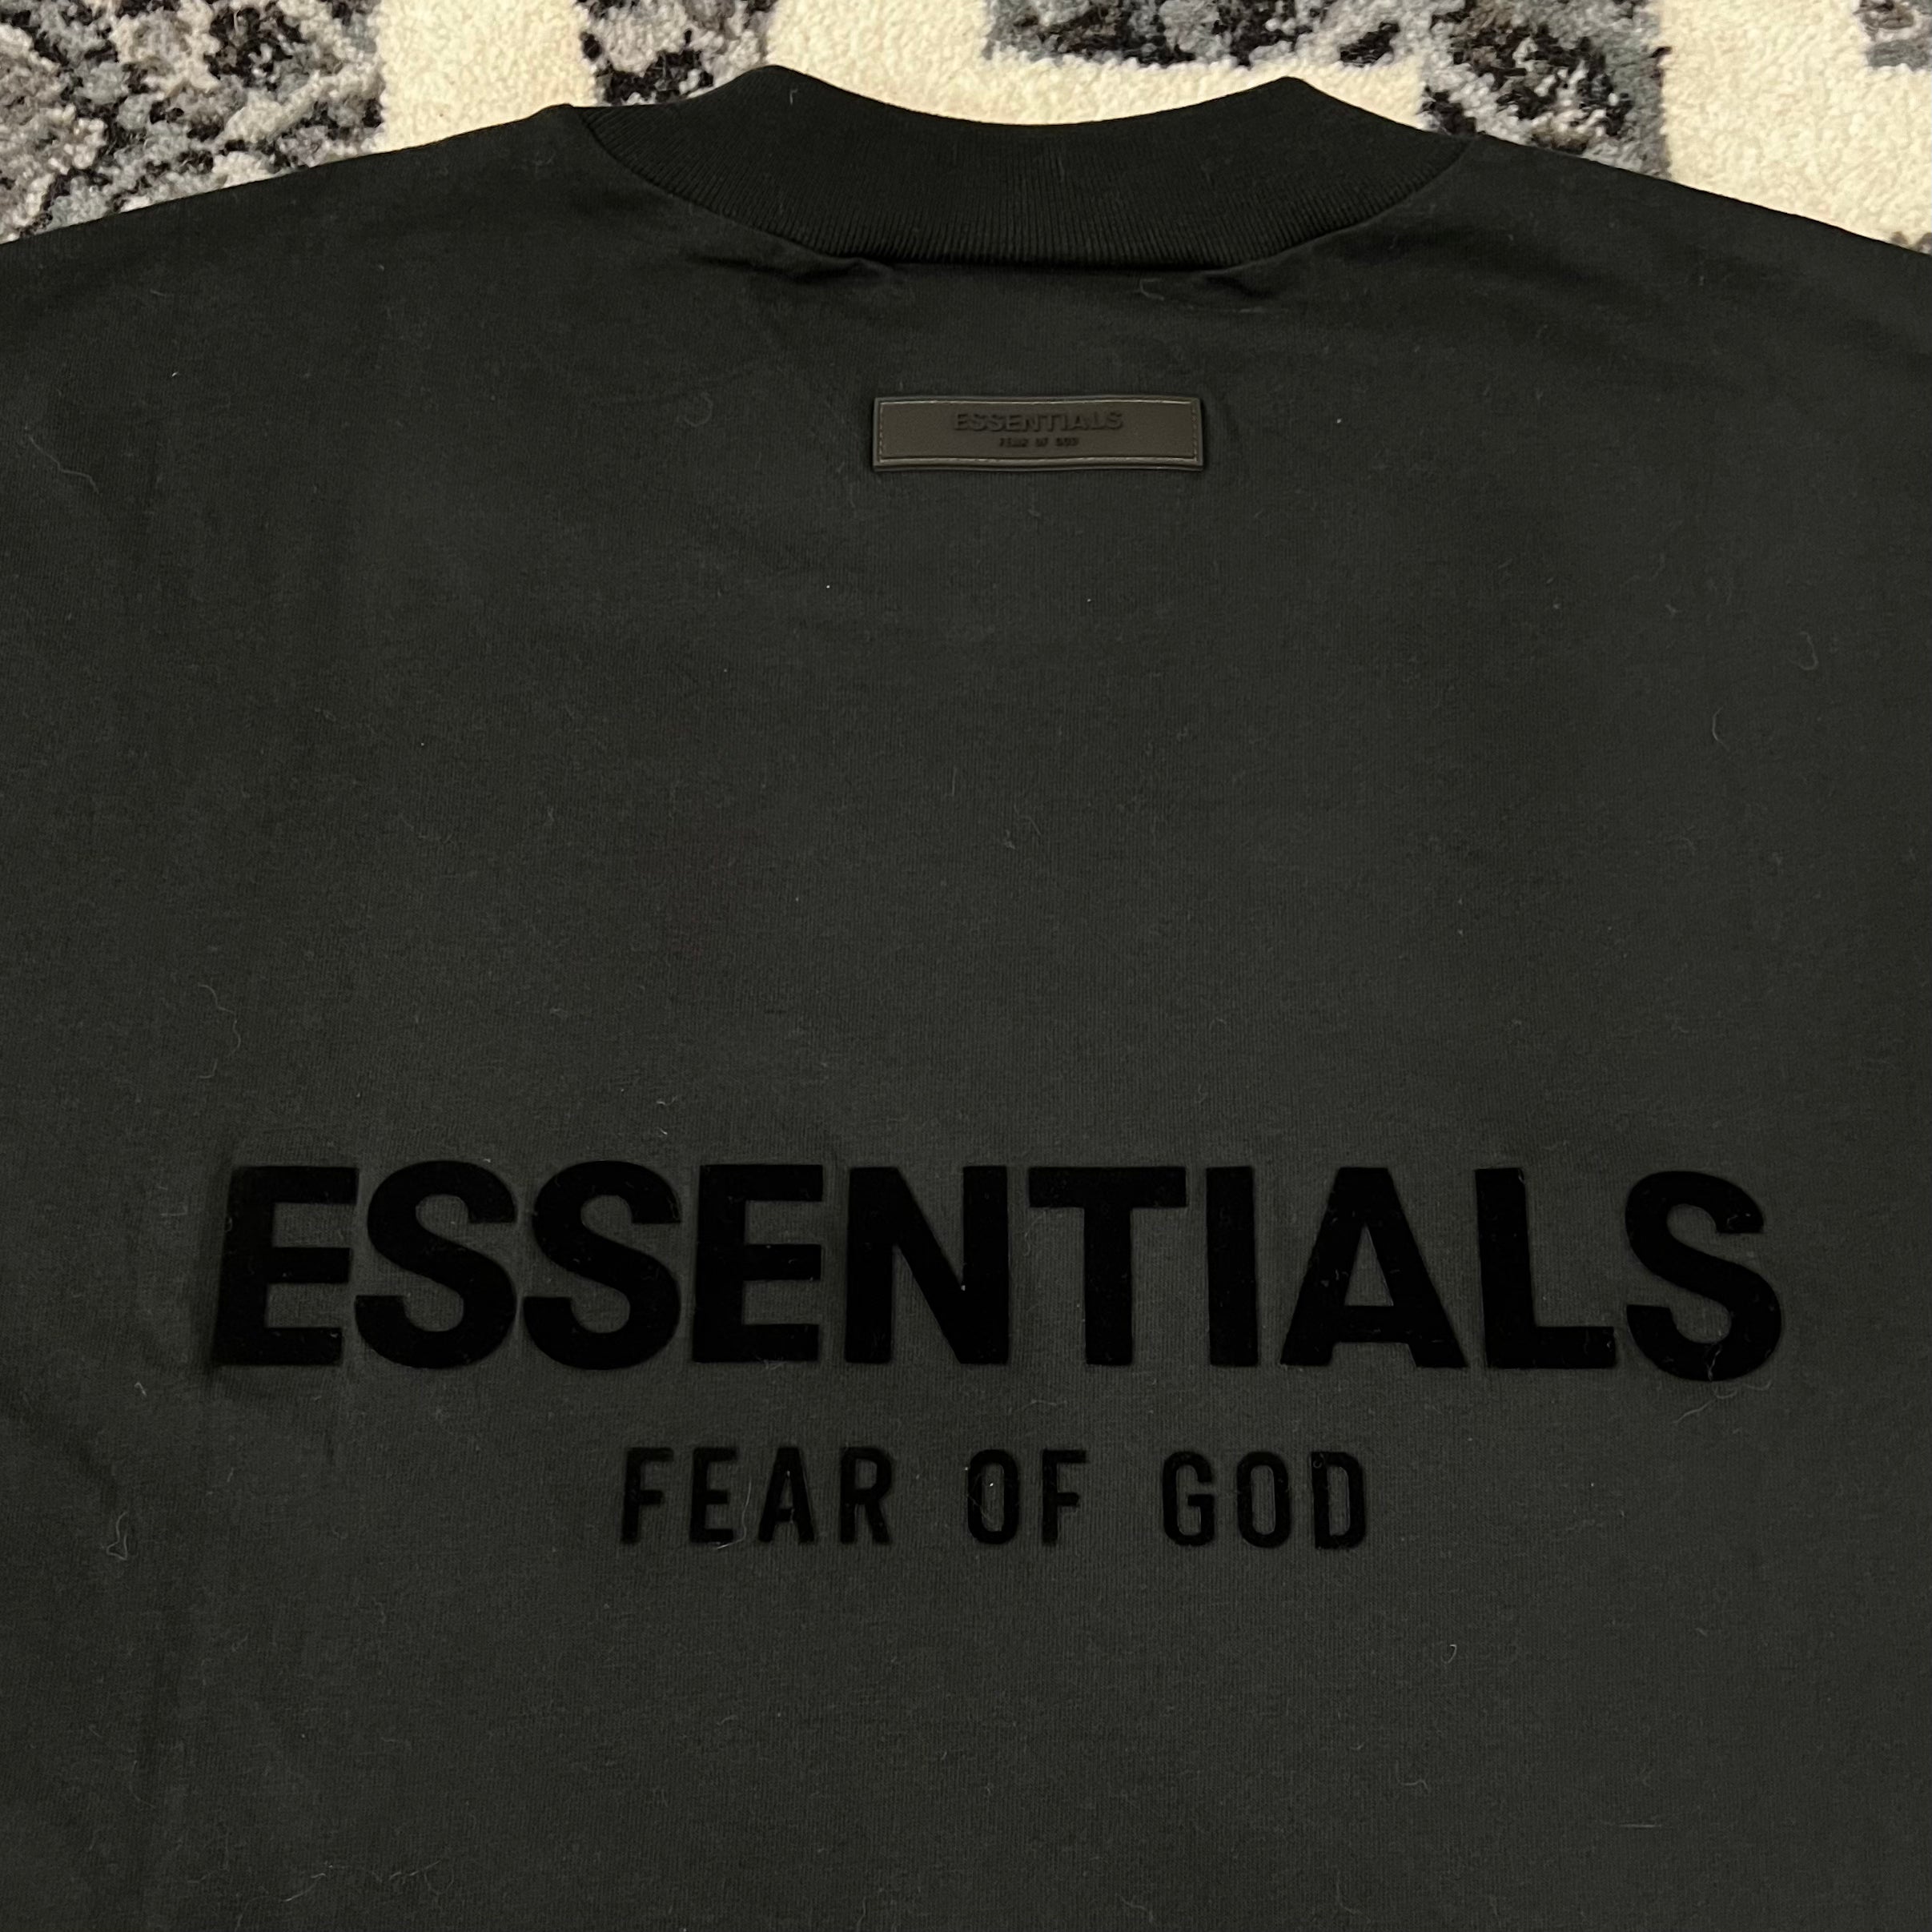 Essentials Fear of God T-shirt Black Showroom NHYPE 3 Lodz Polska